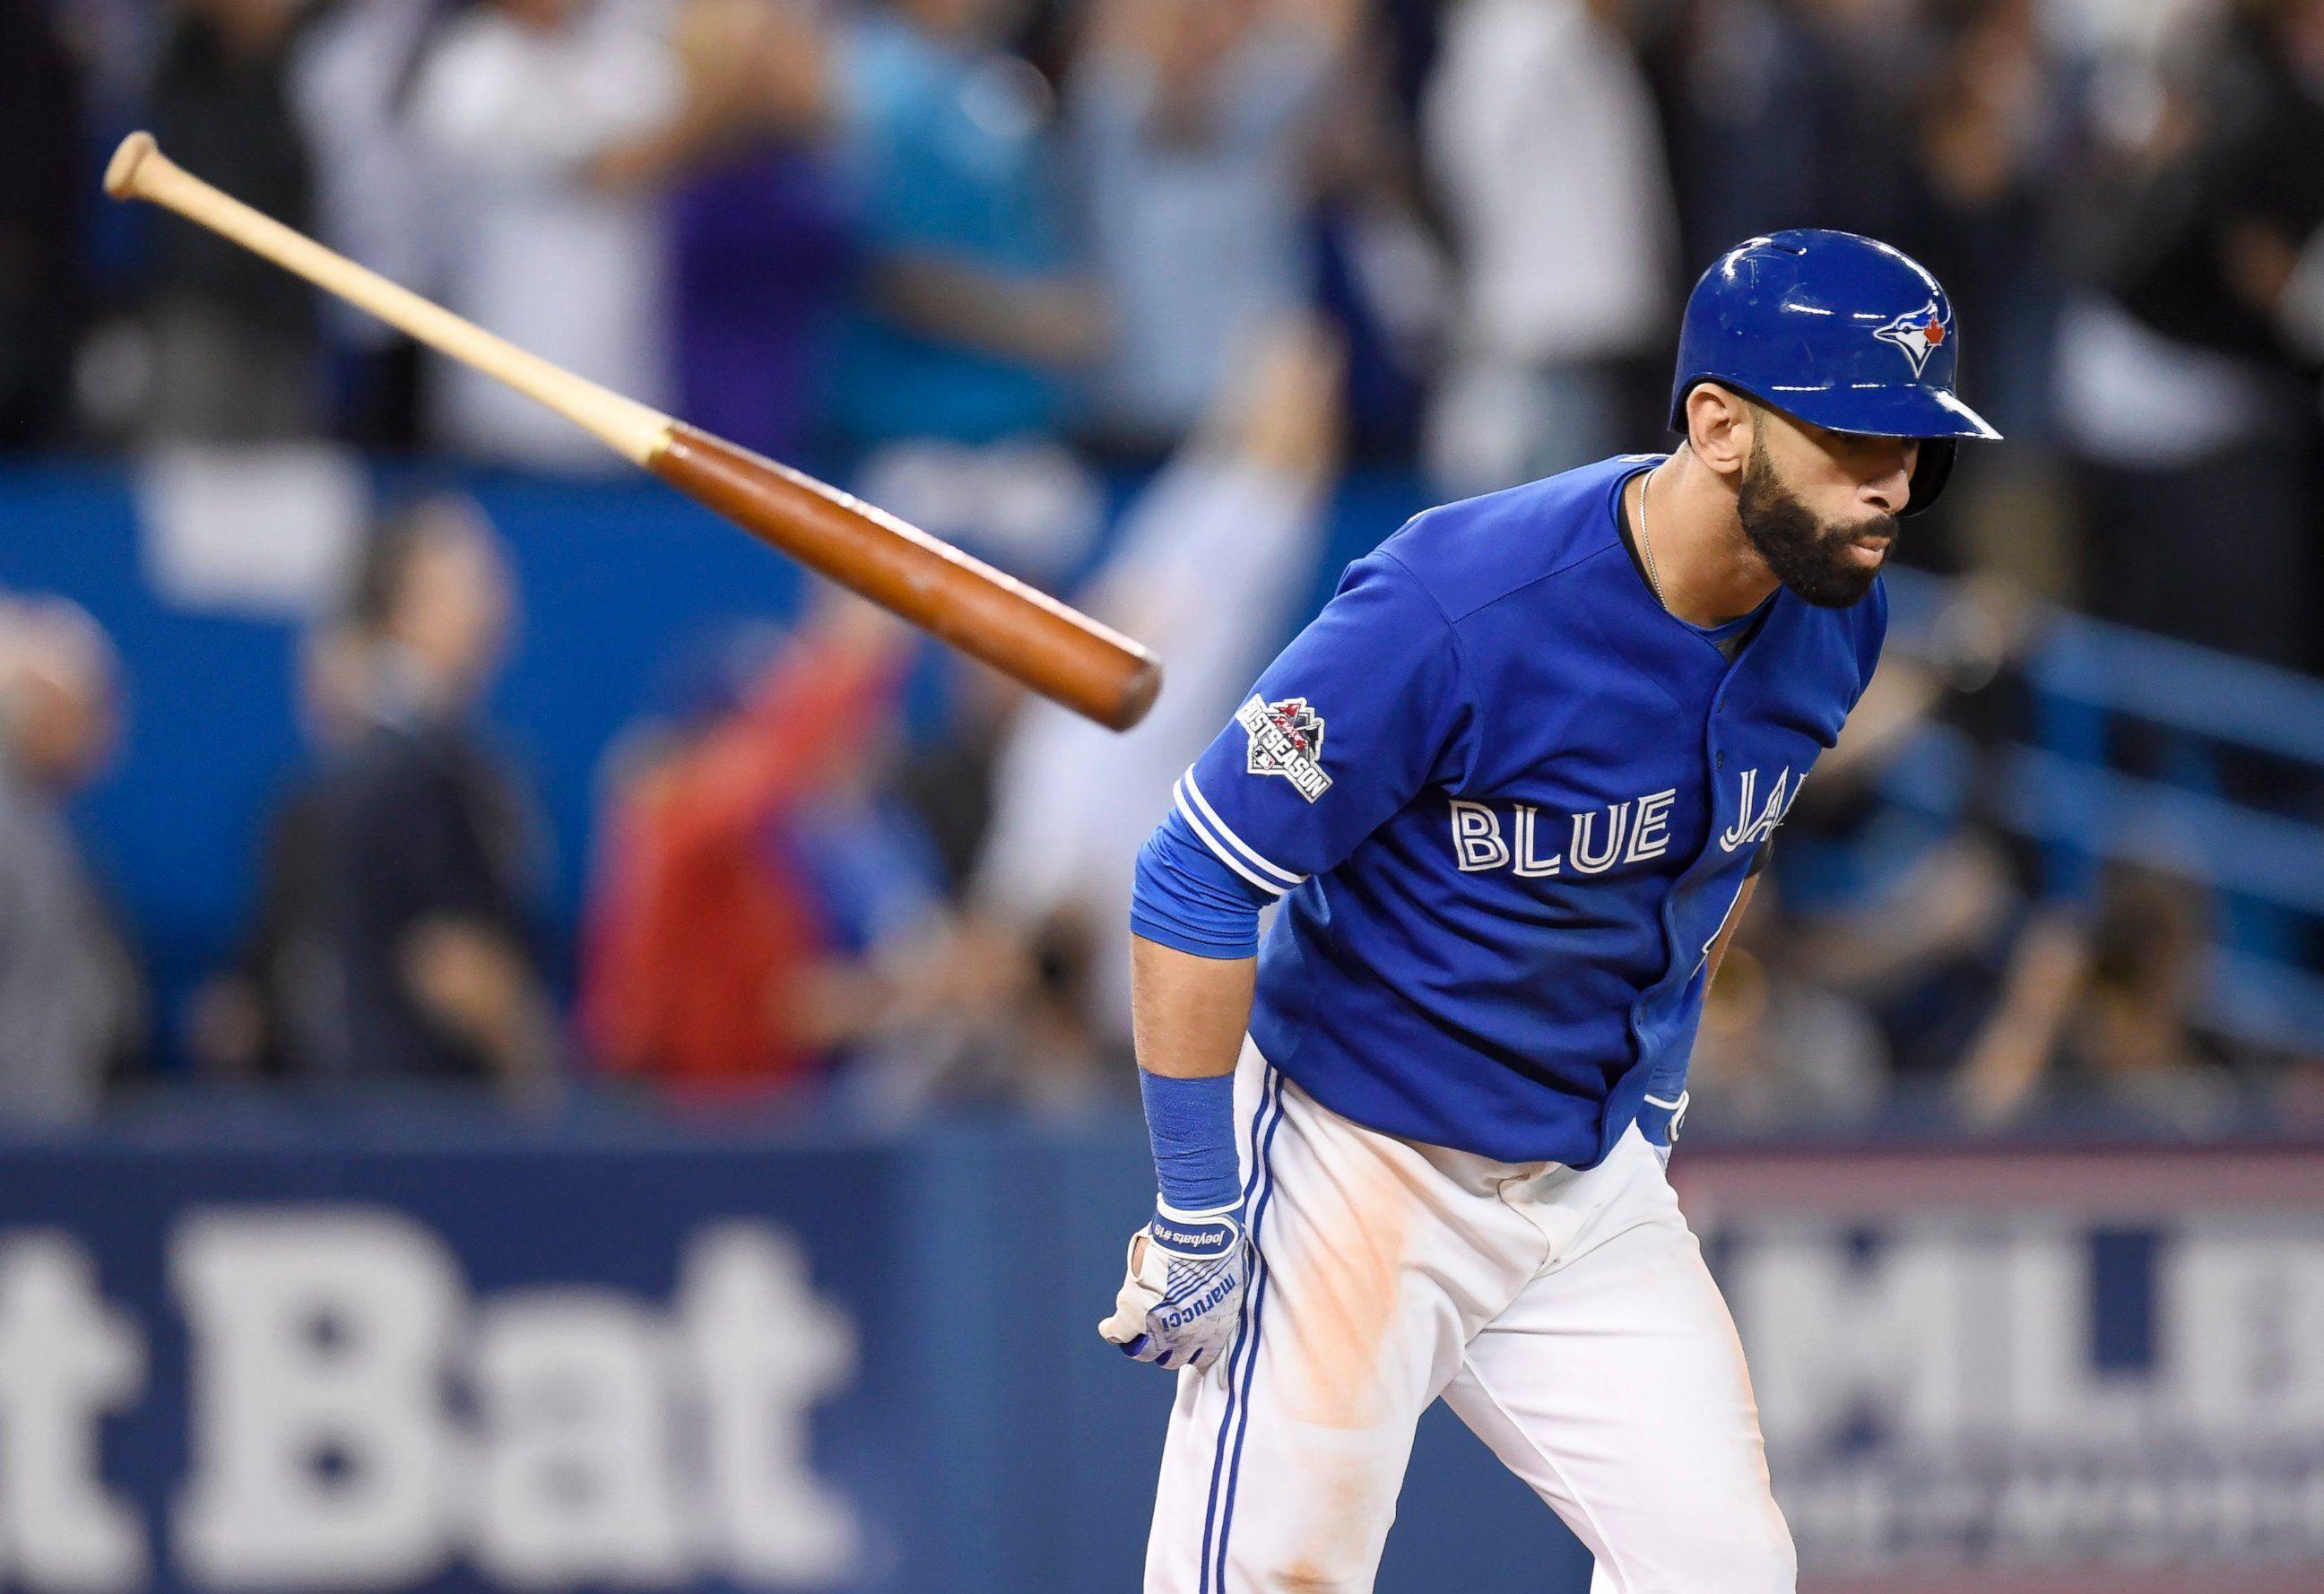 PHOTO: Toronto Blue Jays' Jose Bautista flips his bat after